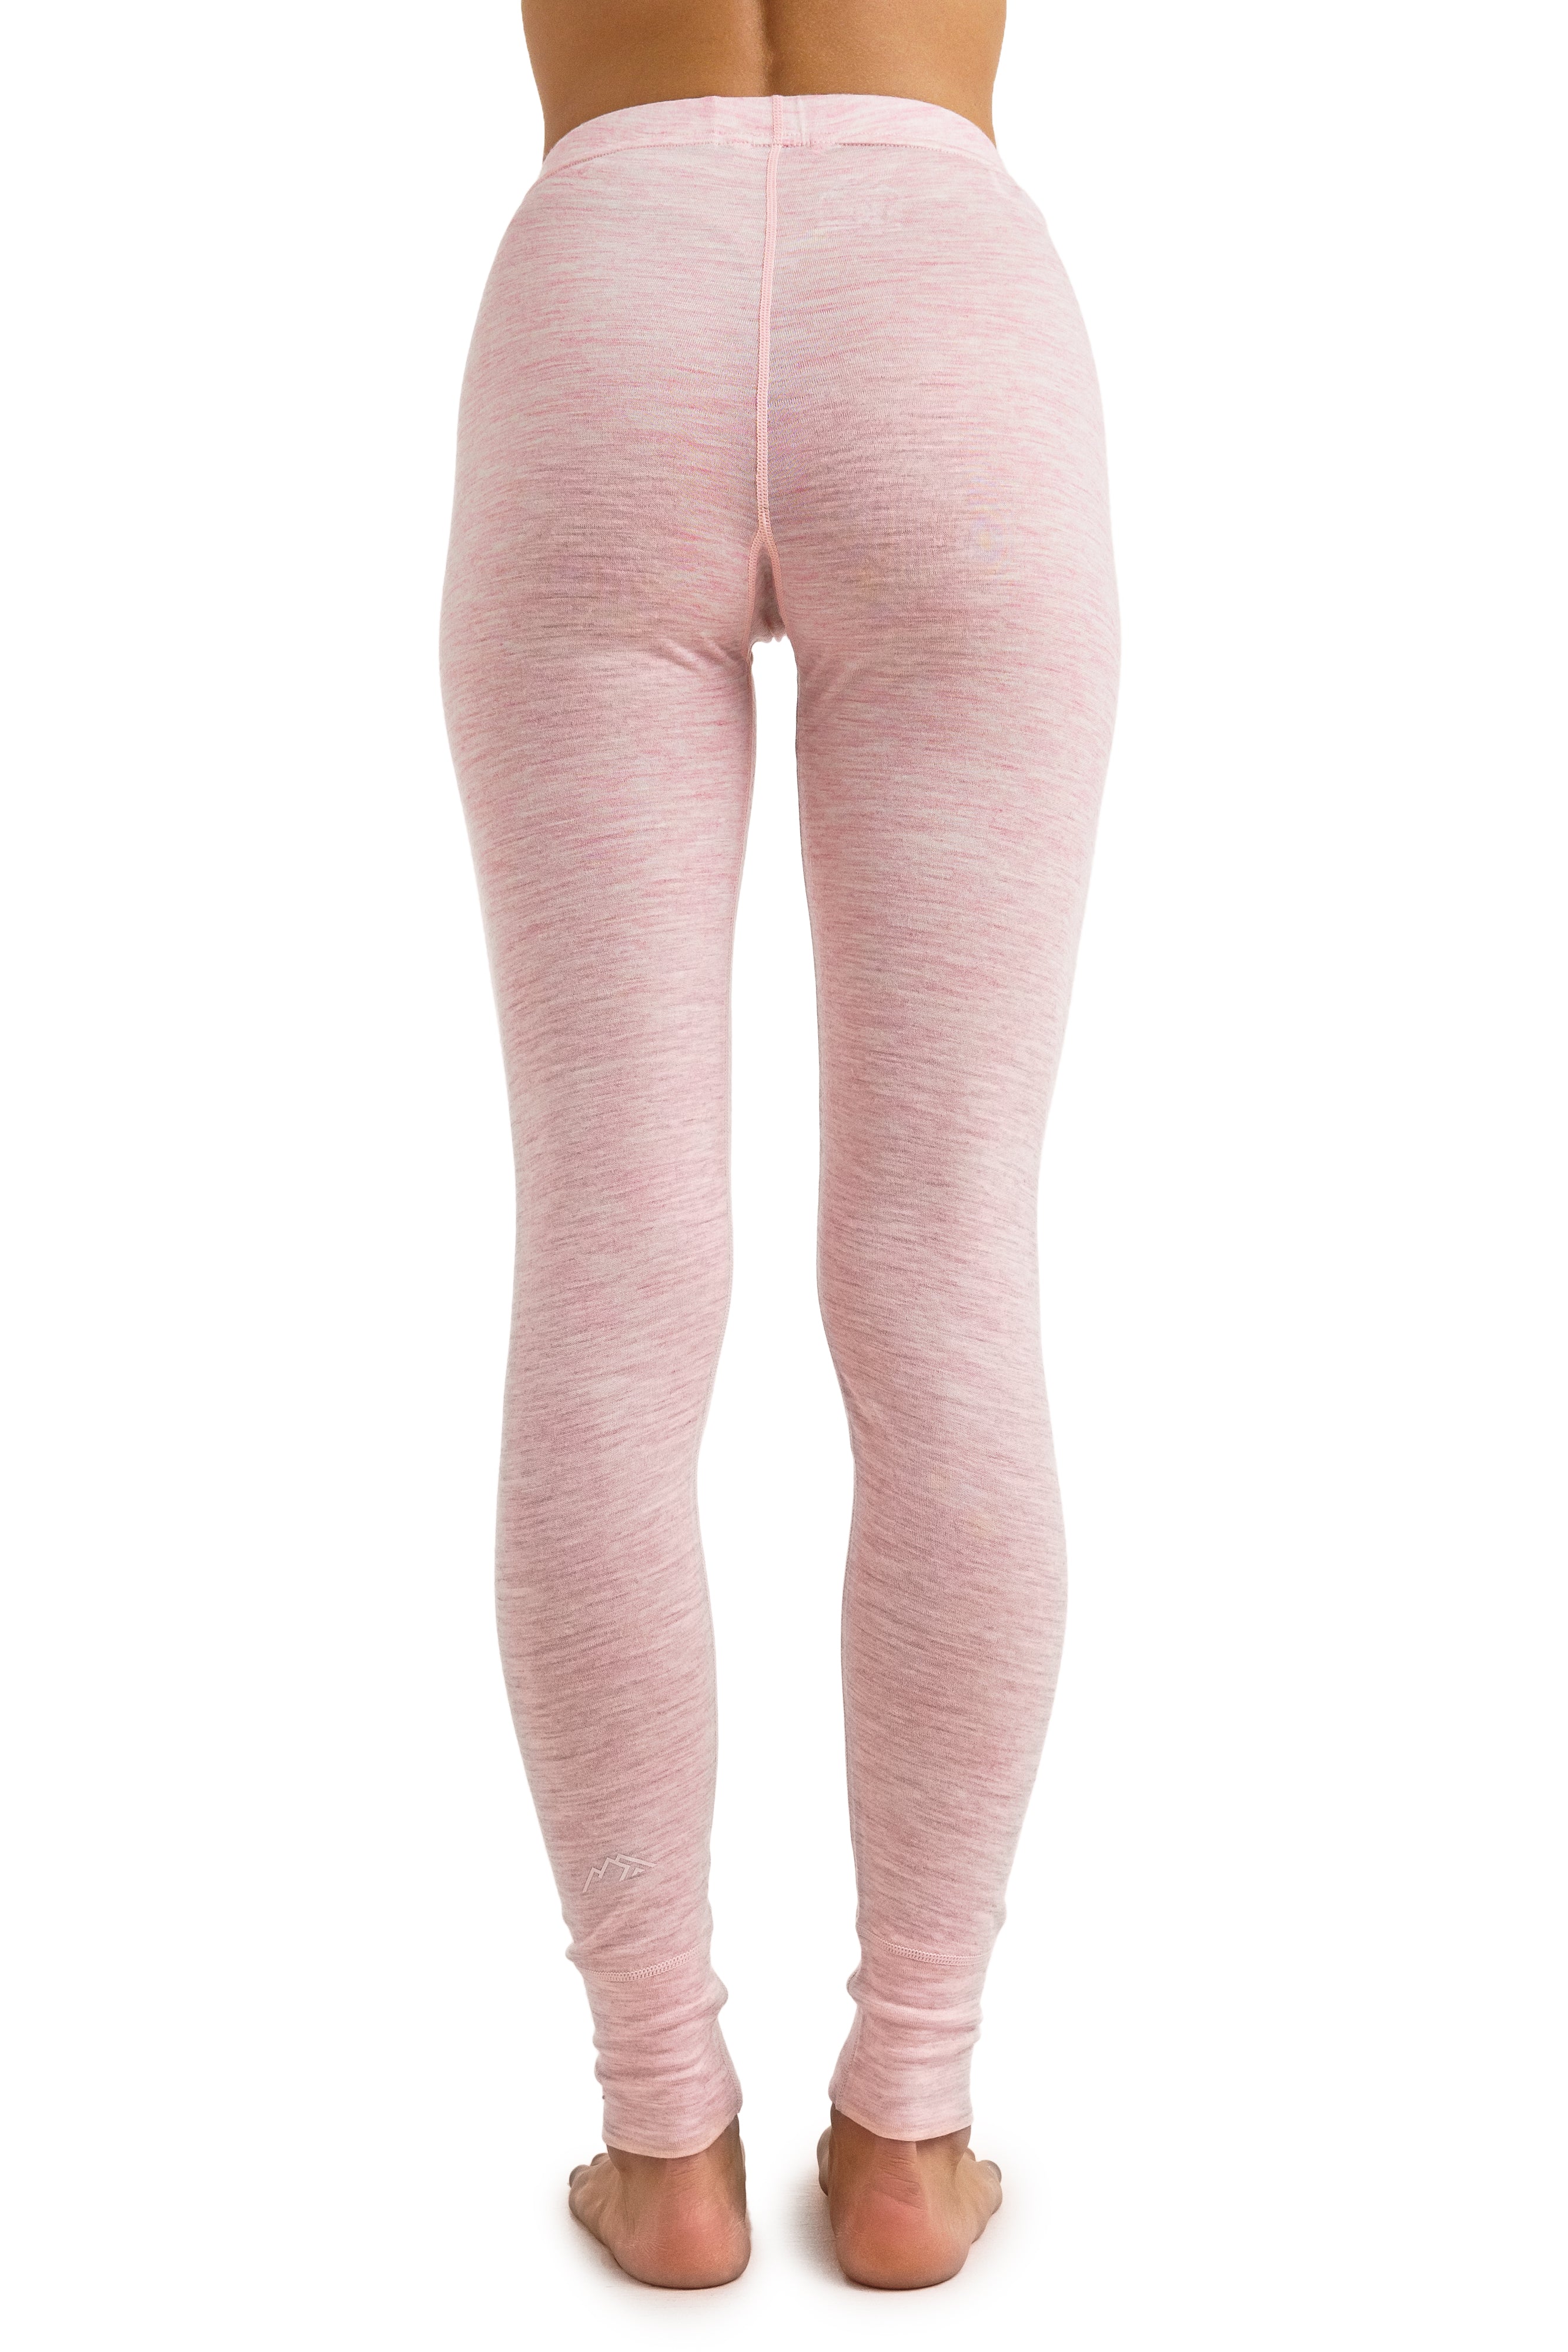 Women's Merino Wool Pants - Base Layer Pink Heather